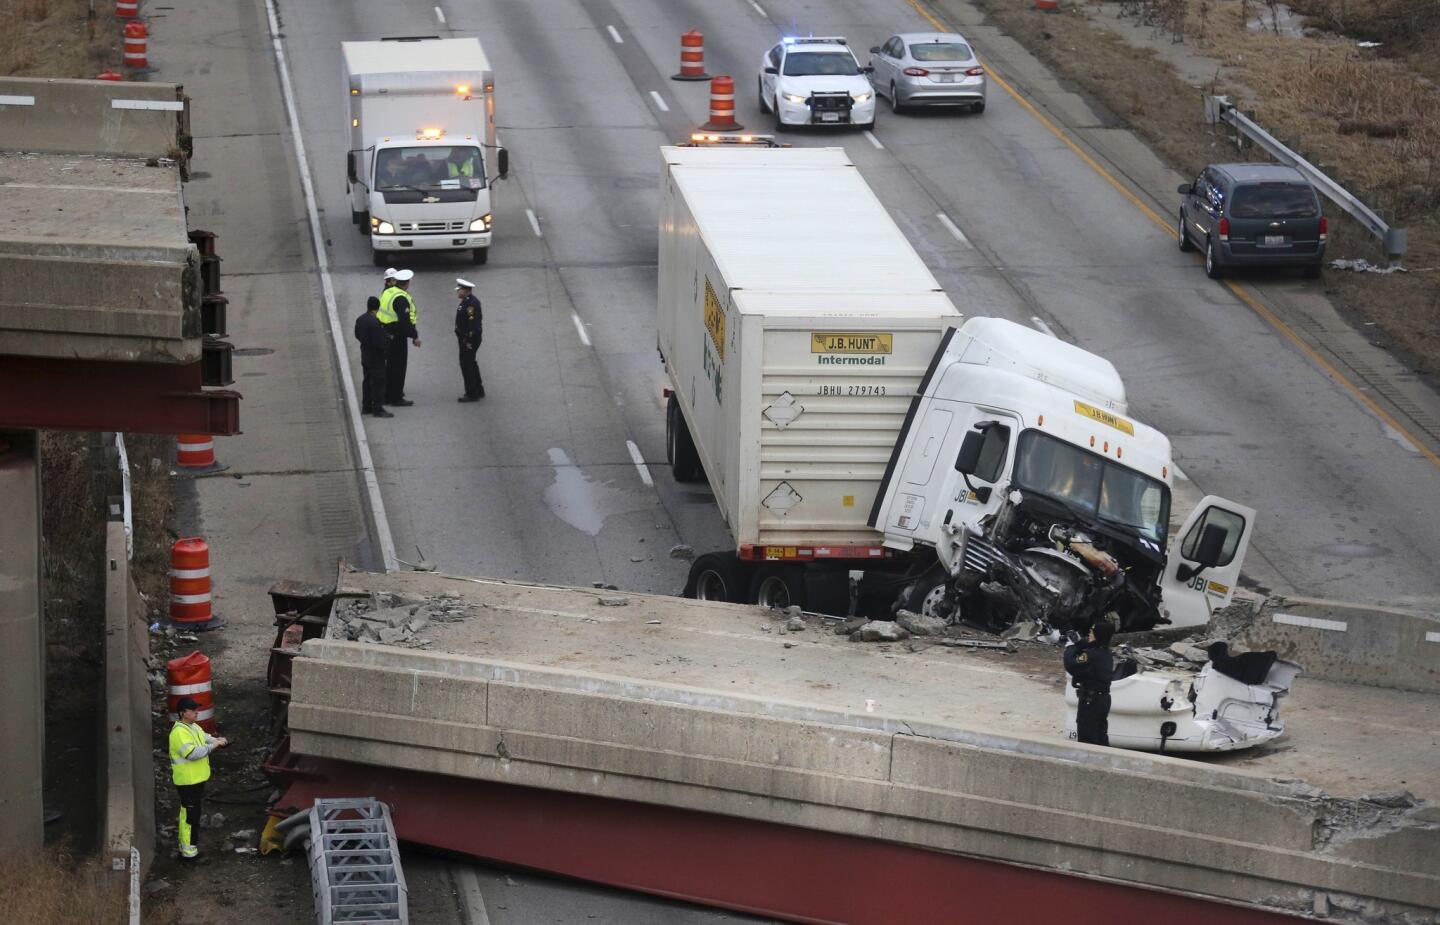 The aftermath of a bridge collapse on Interstate 75, Tuesday, Jan. 20, 2015 in Cincinnati, Ohio.